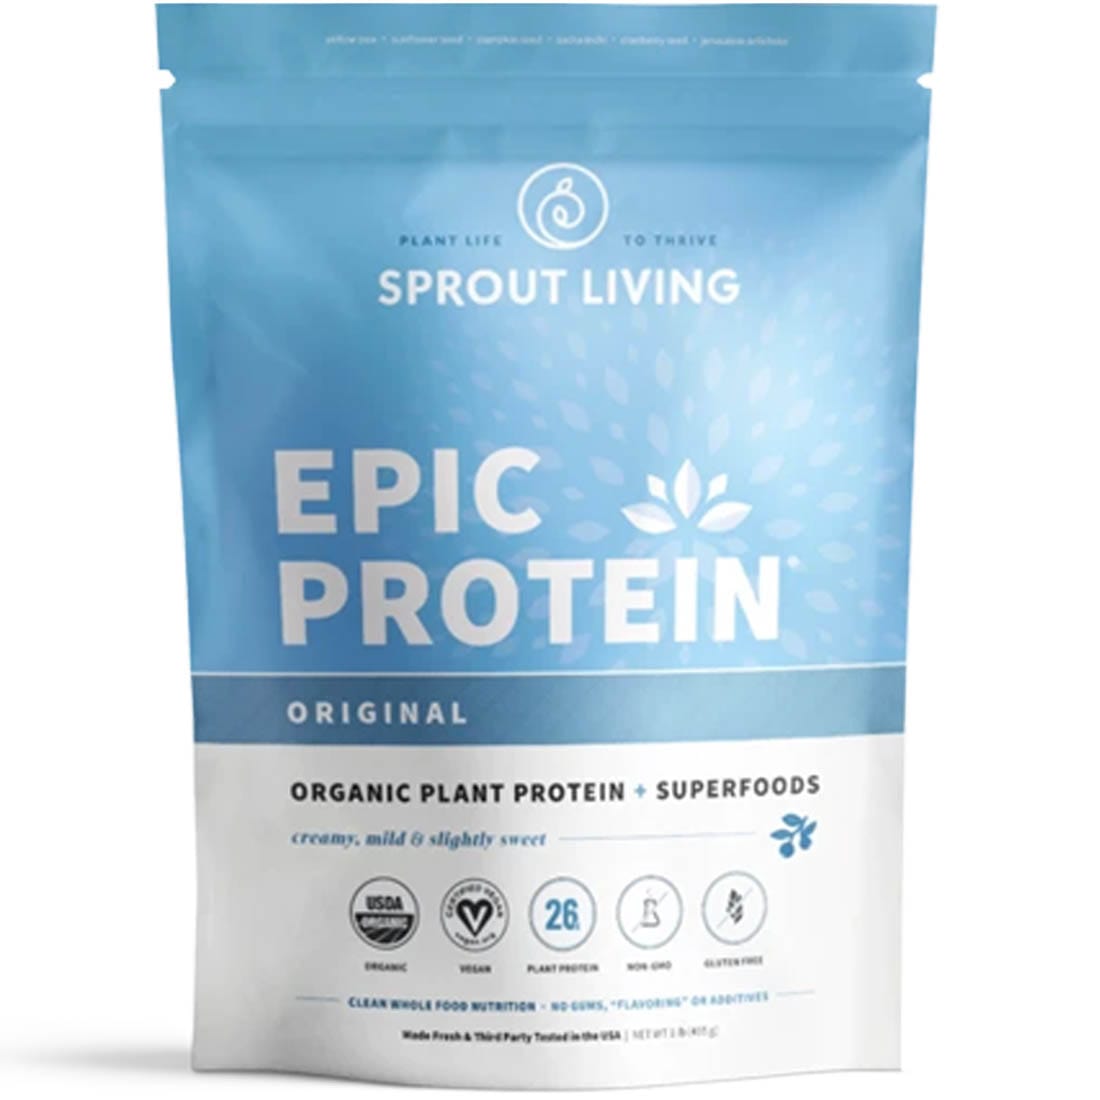 Sprout Living Epic Protein Organic Plant Protein, Made Fresh, Vegan, Gluten-Free, Non-GMO